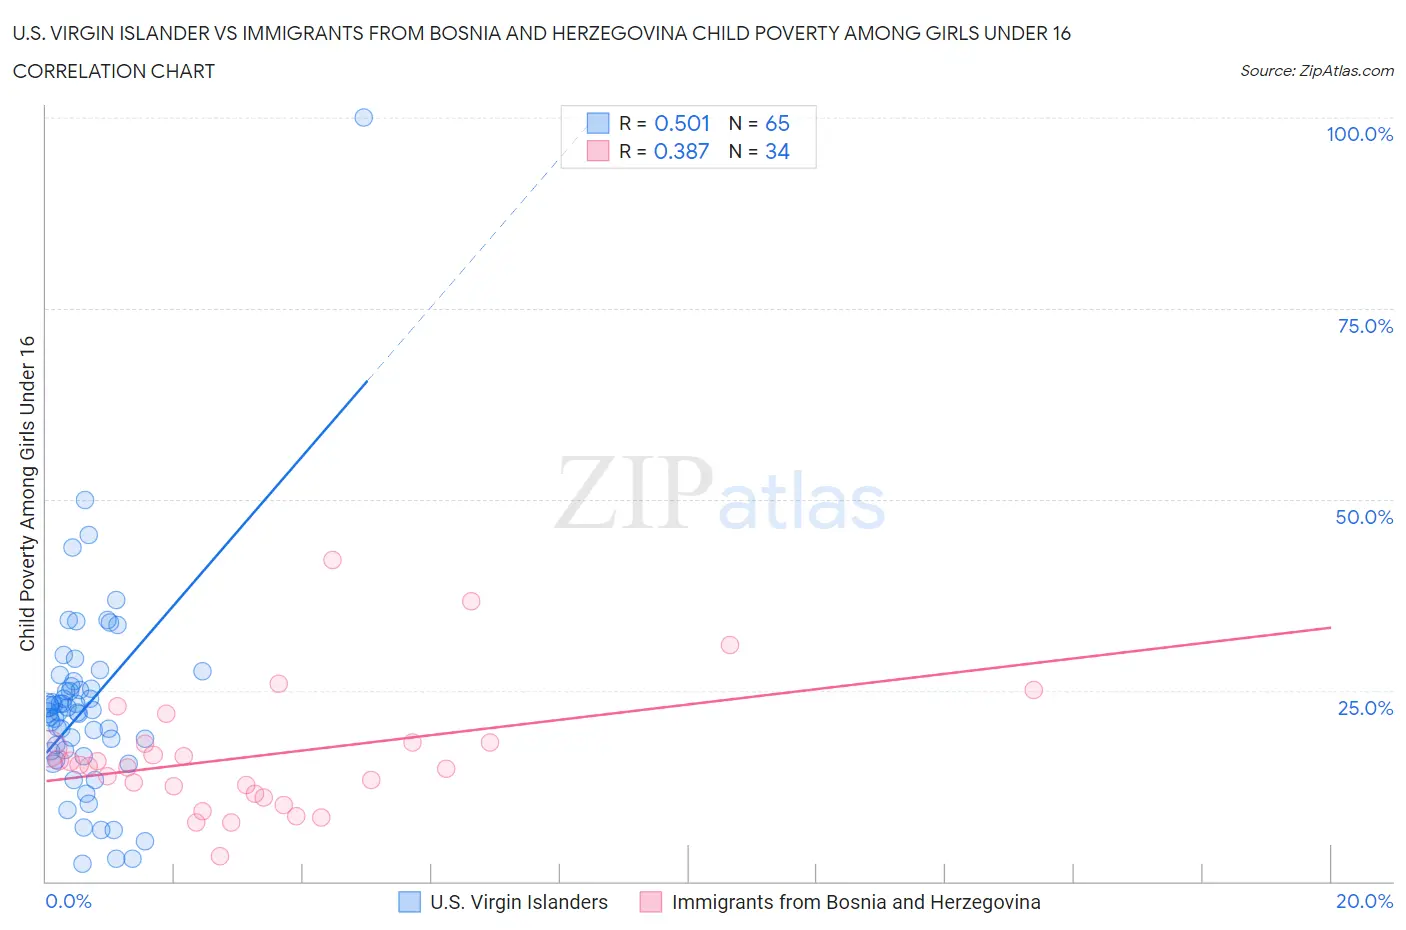 U.S. Virgin Islander vs Immigrants from Bosnia and Herzegovina Child Poverty Among Girls Under 16